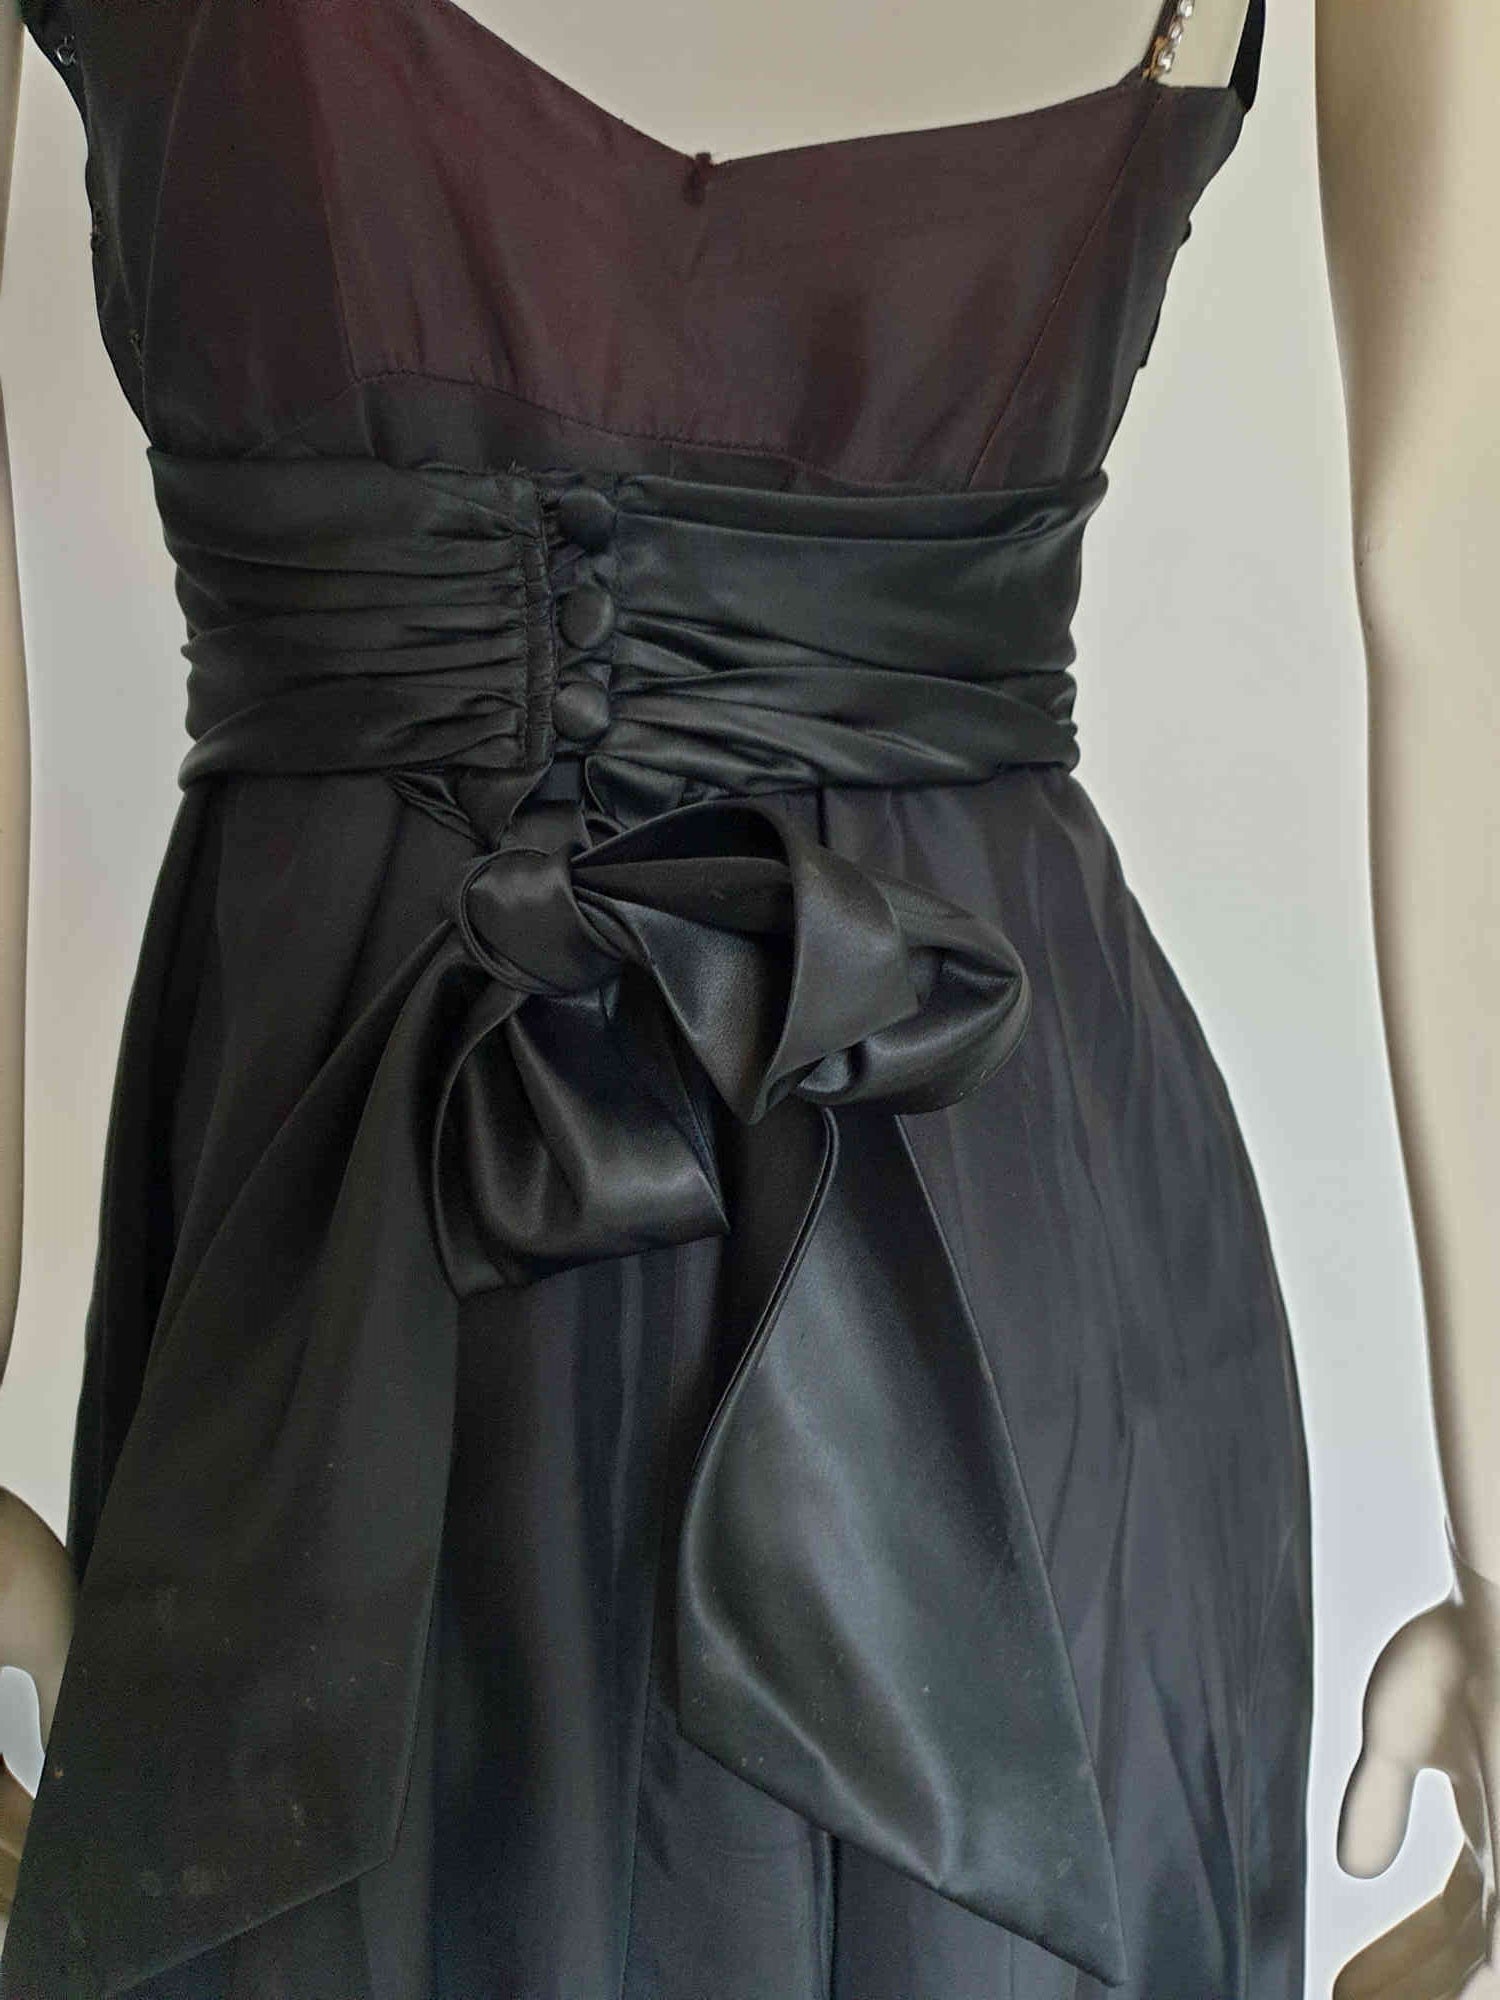 1950s vintage black taffeta dance dress with full skirt diamantes and cummerbund xs